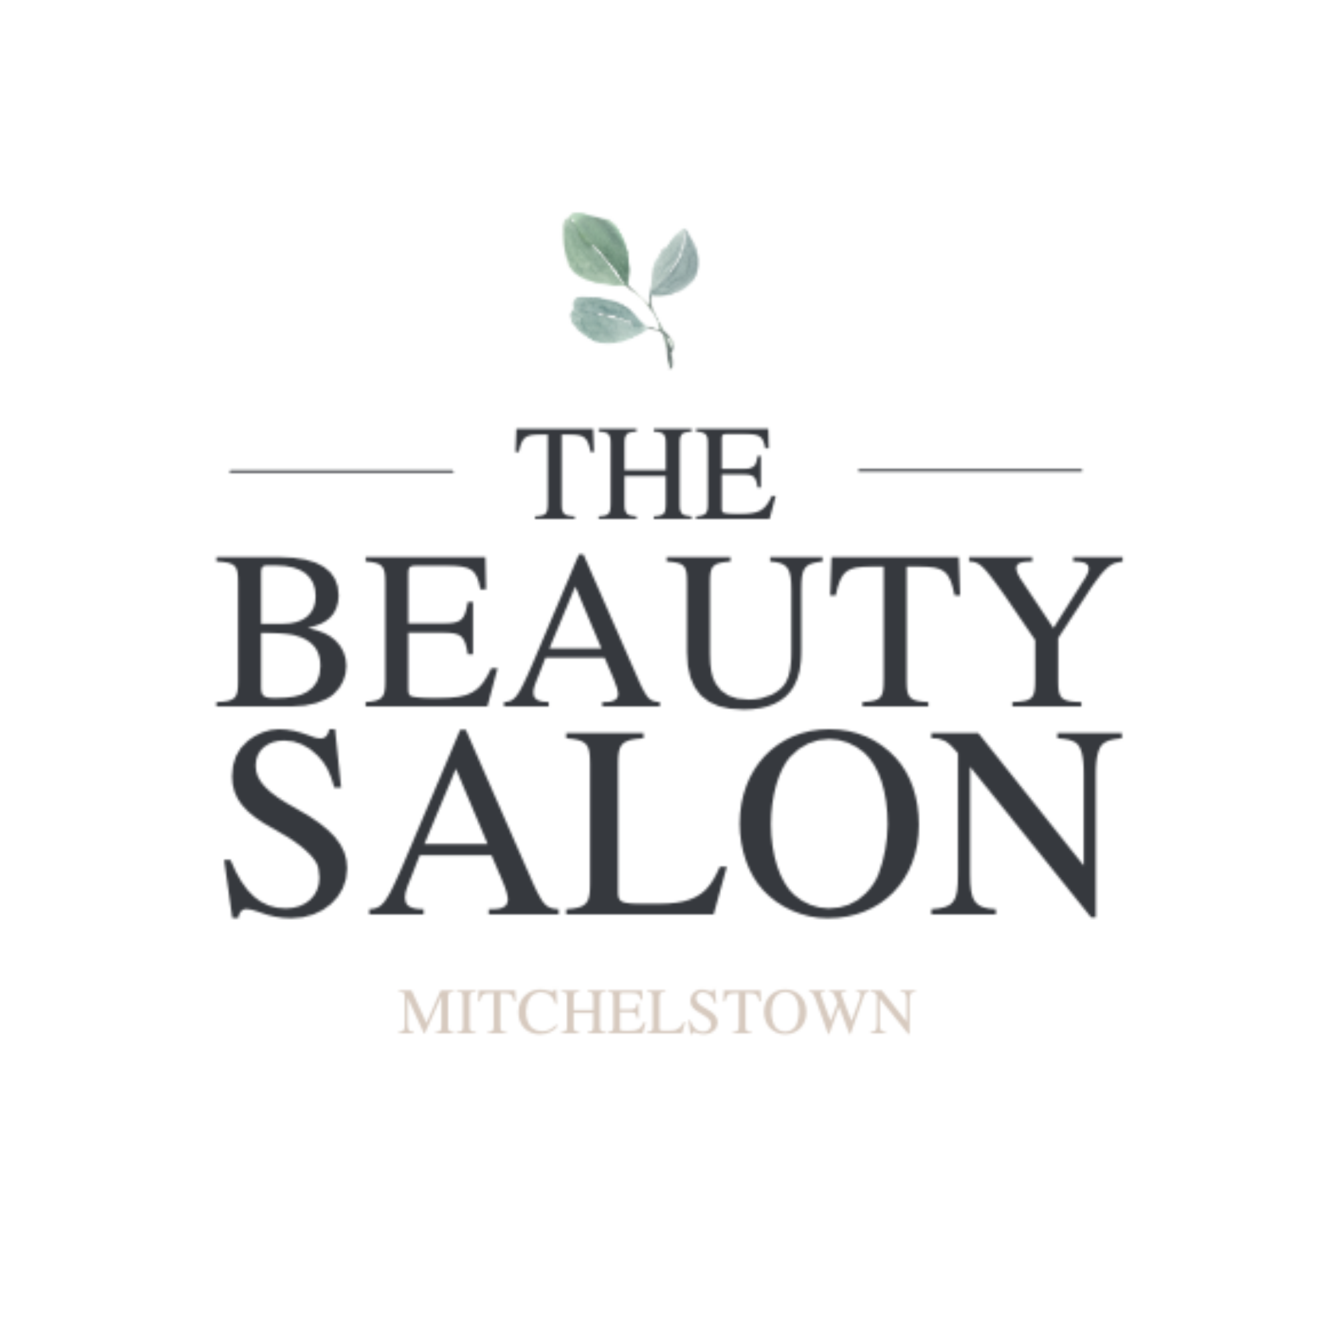 The Beauty Salon Mitchelstown